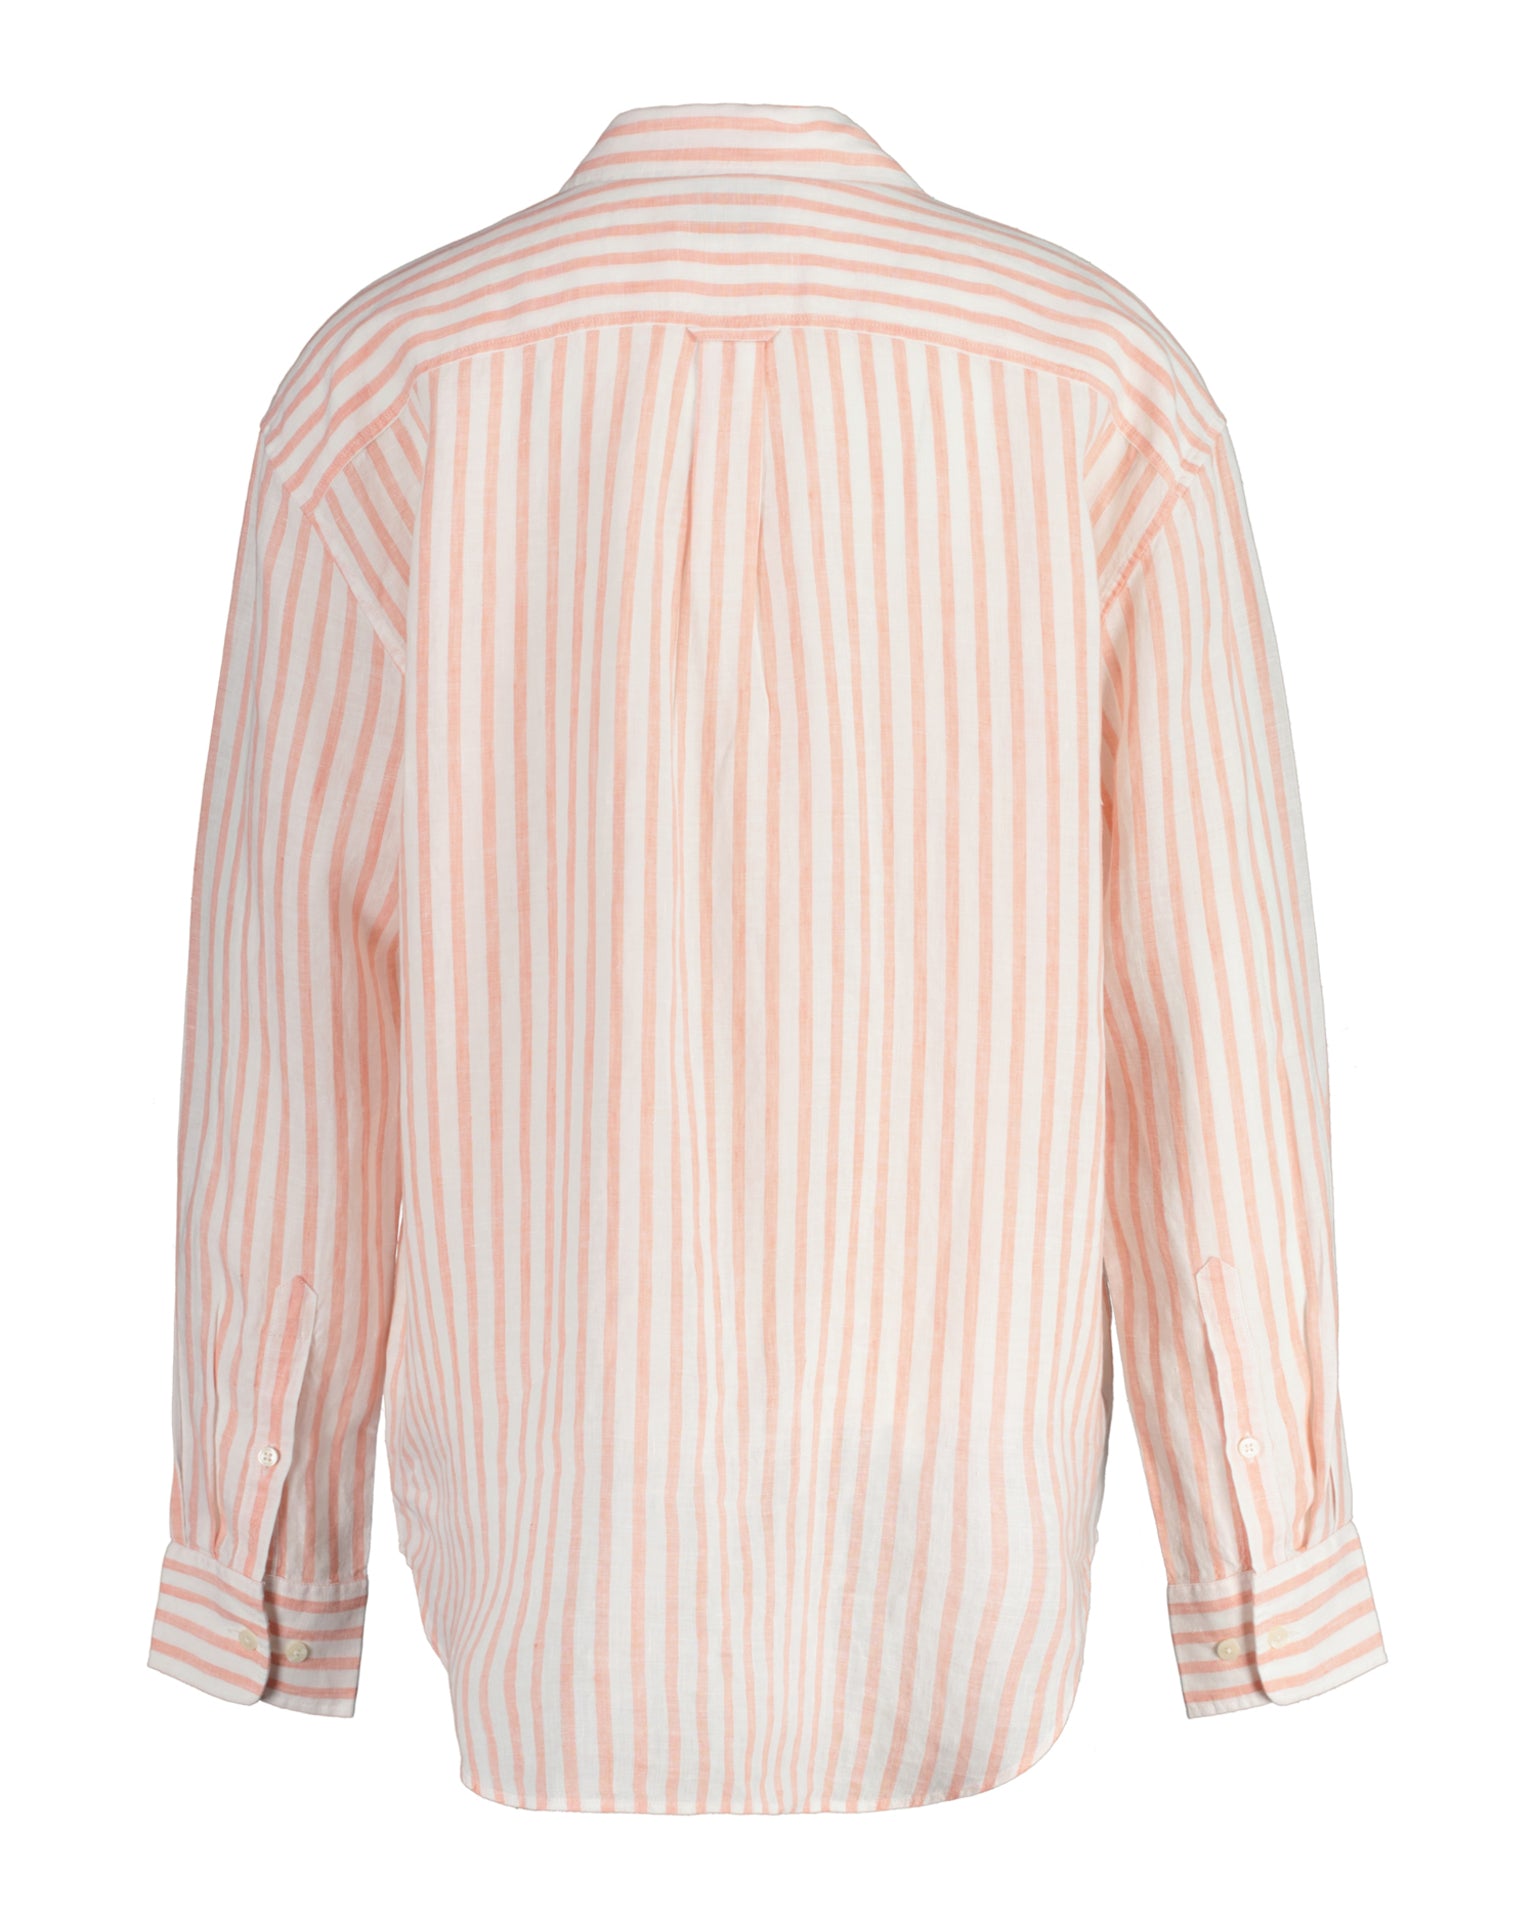 Rel Striped Linen Shirt - Peachy Pink